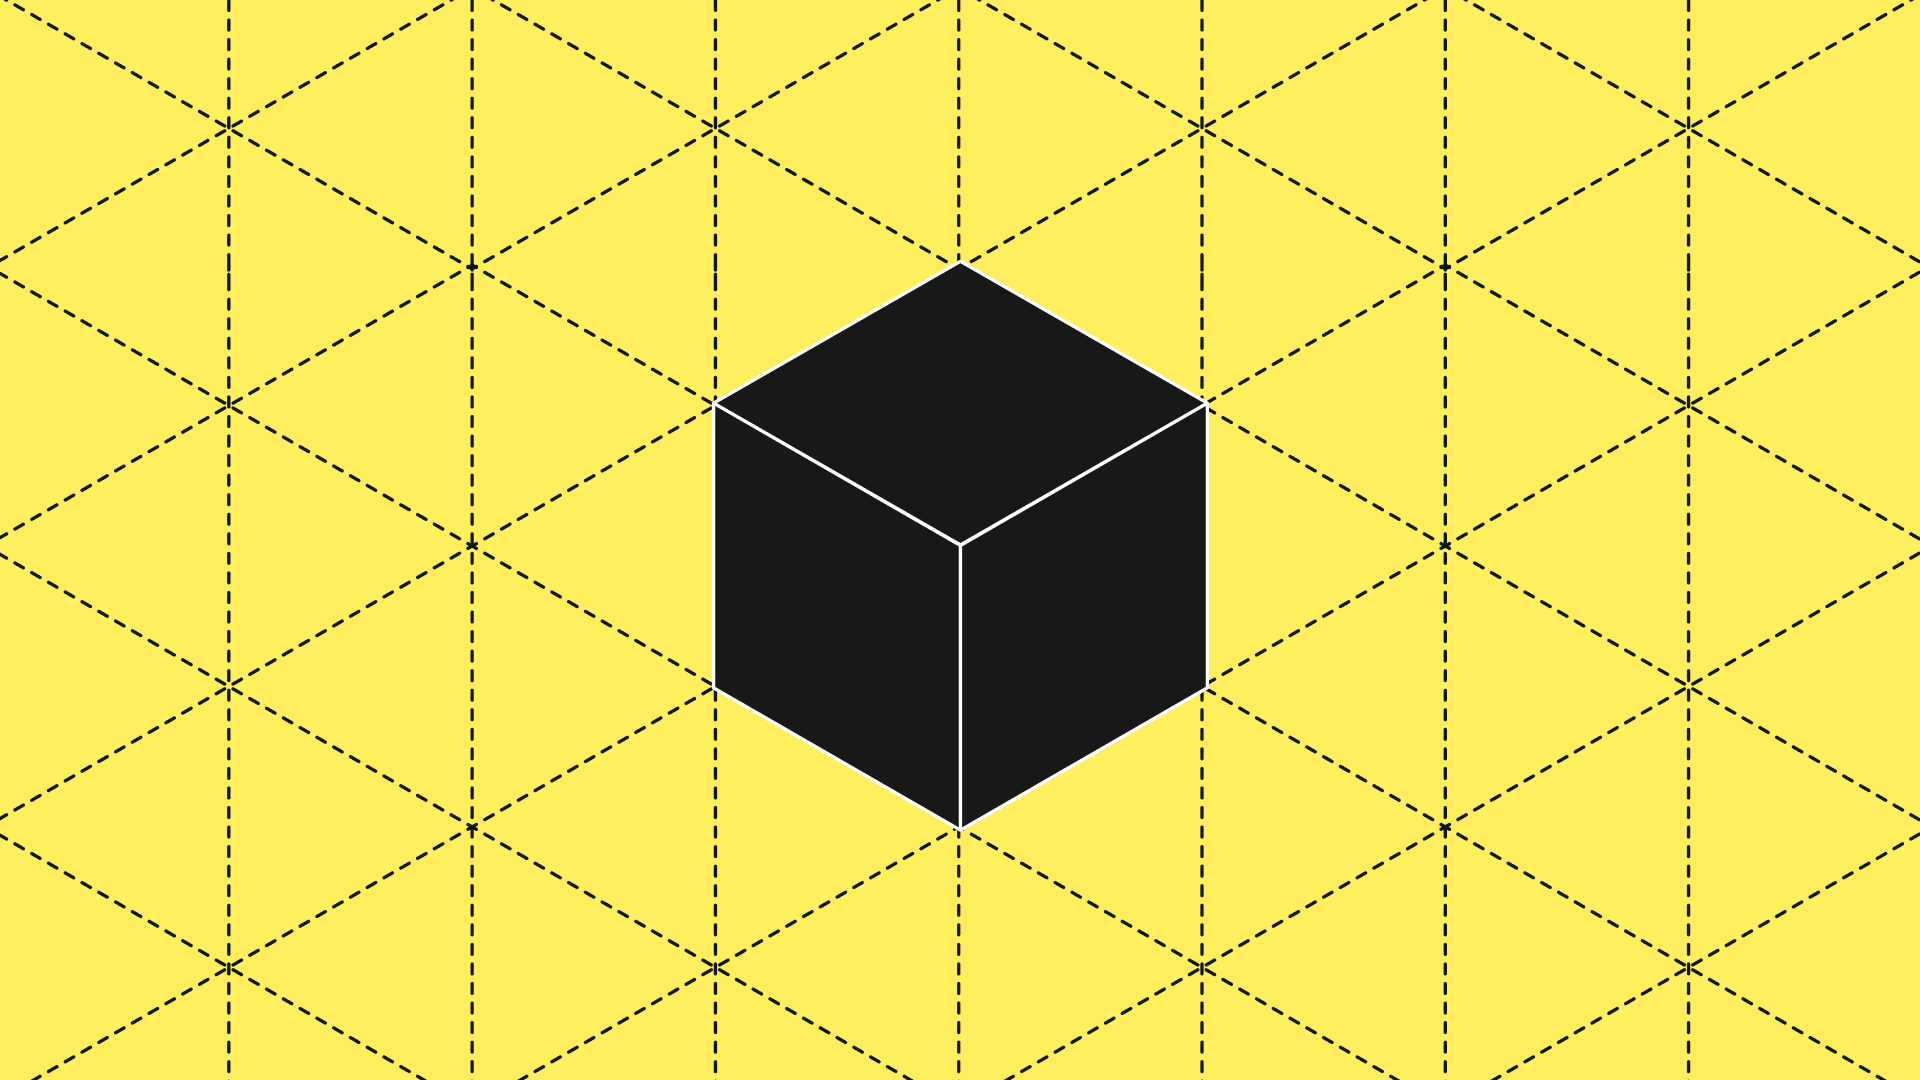 Live A Live Remake - The Distant Future Walkthrough (Cube) 